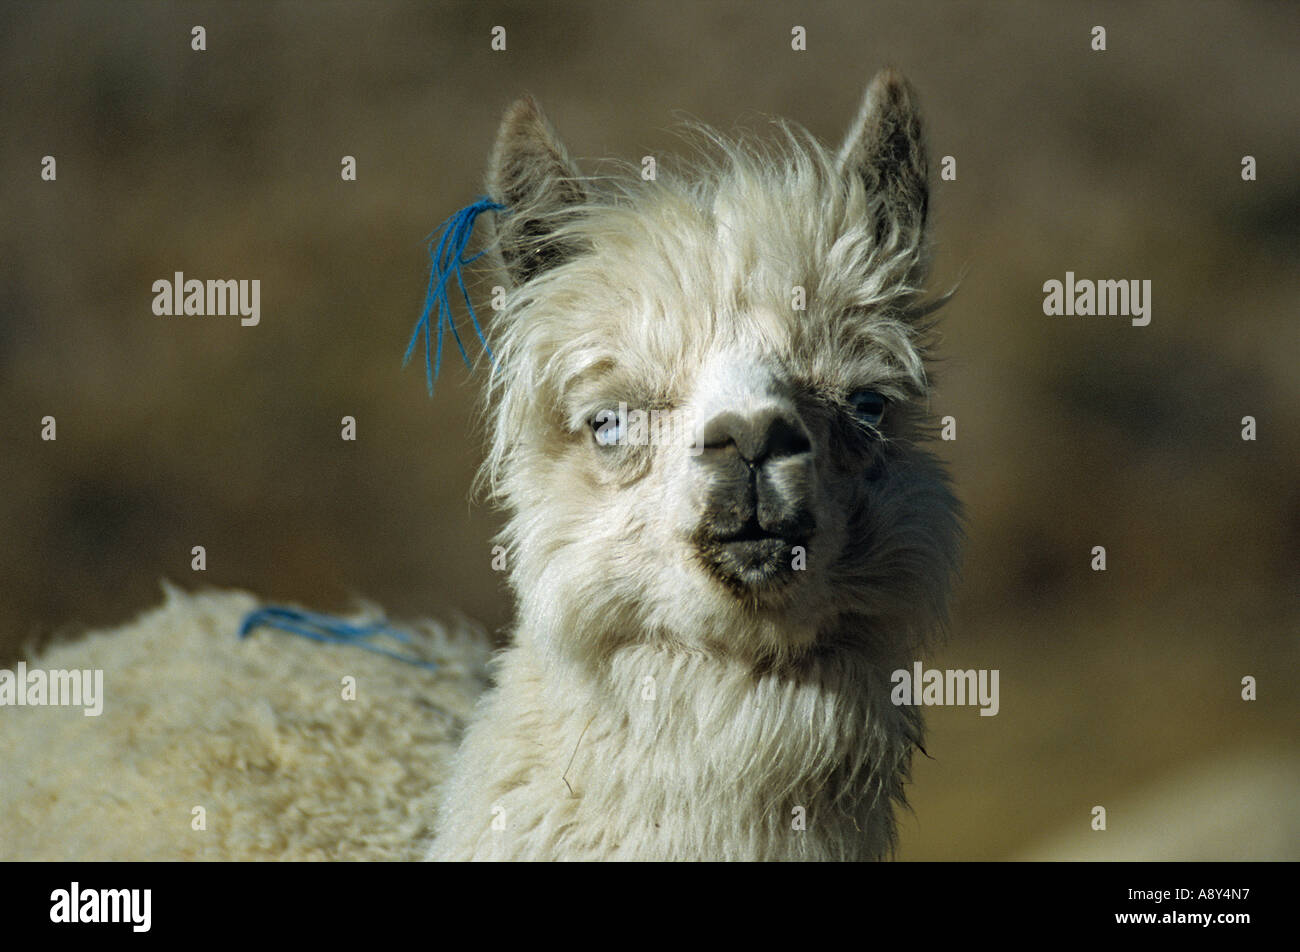 Blue-eyed alpaca (Lama pacos) - Peru. Alpaga (Lama pacos) aux yeux bleus (Pérou). Stock Photo